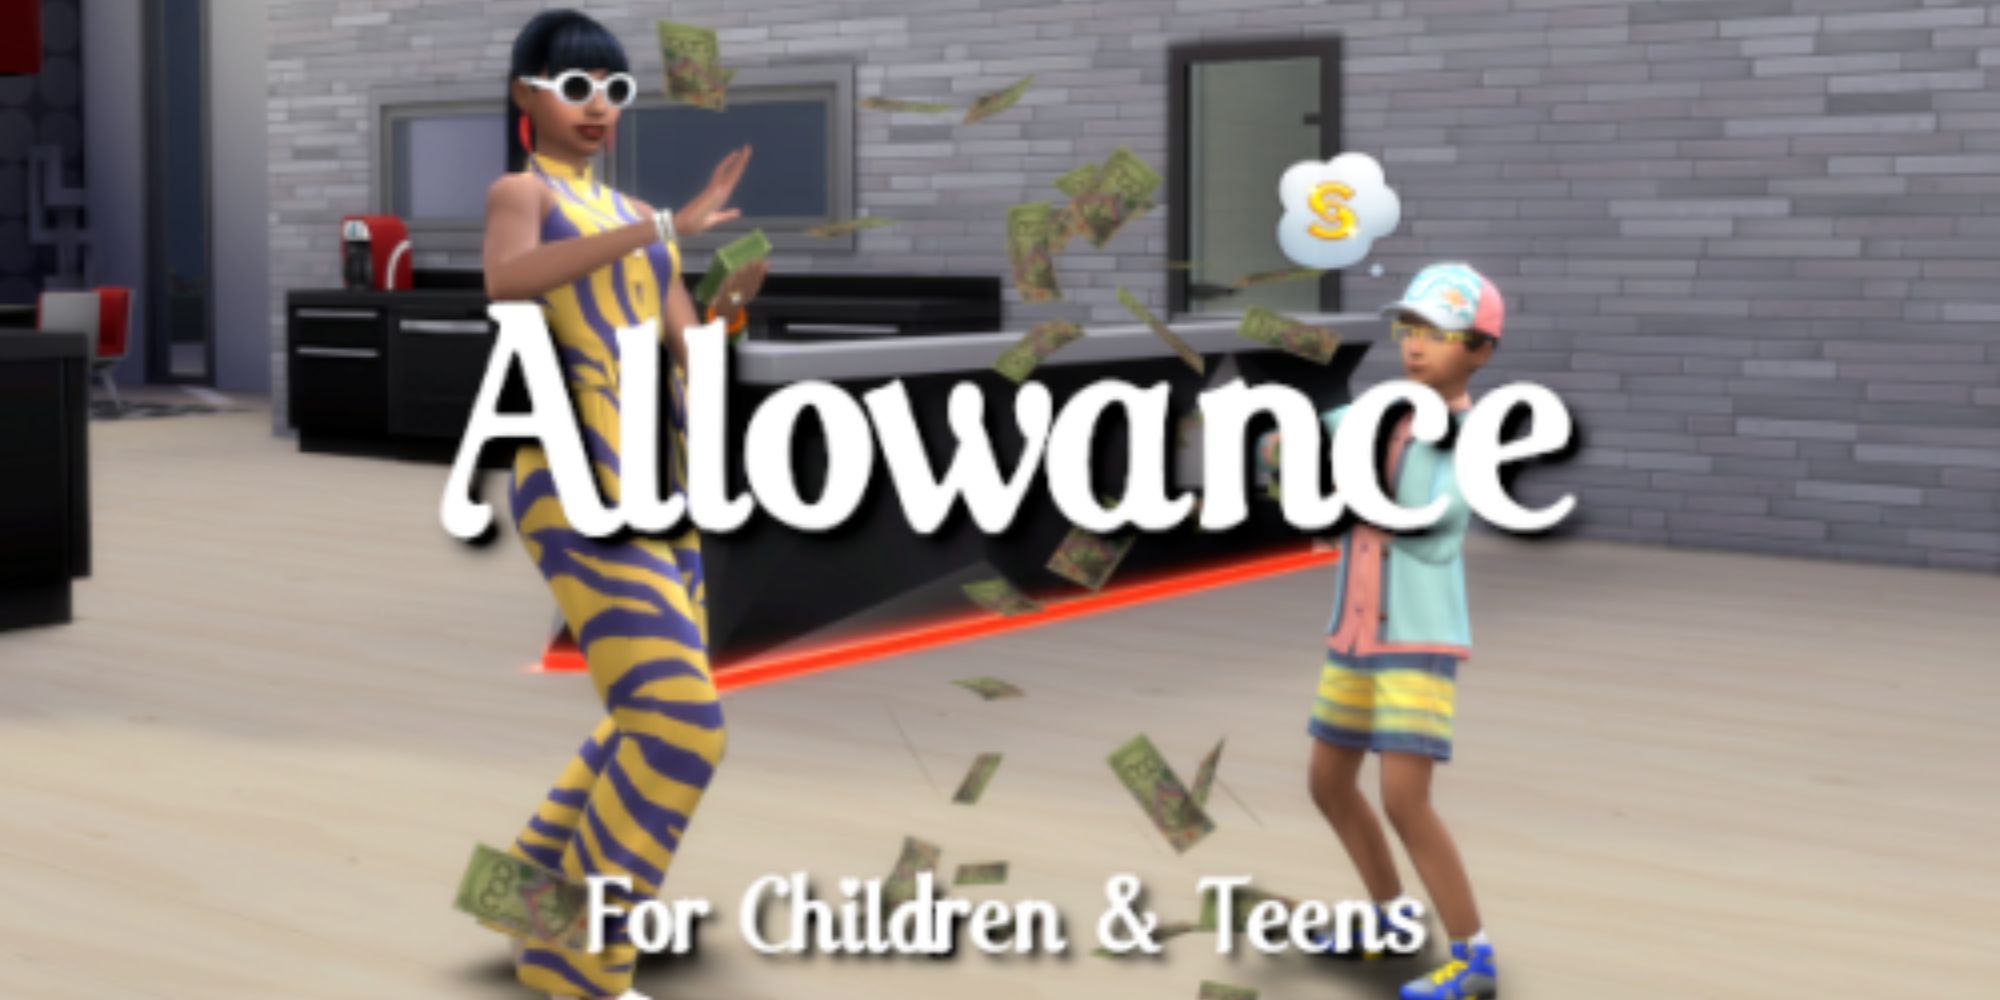 The Sims 4 Allowance Mod